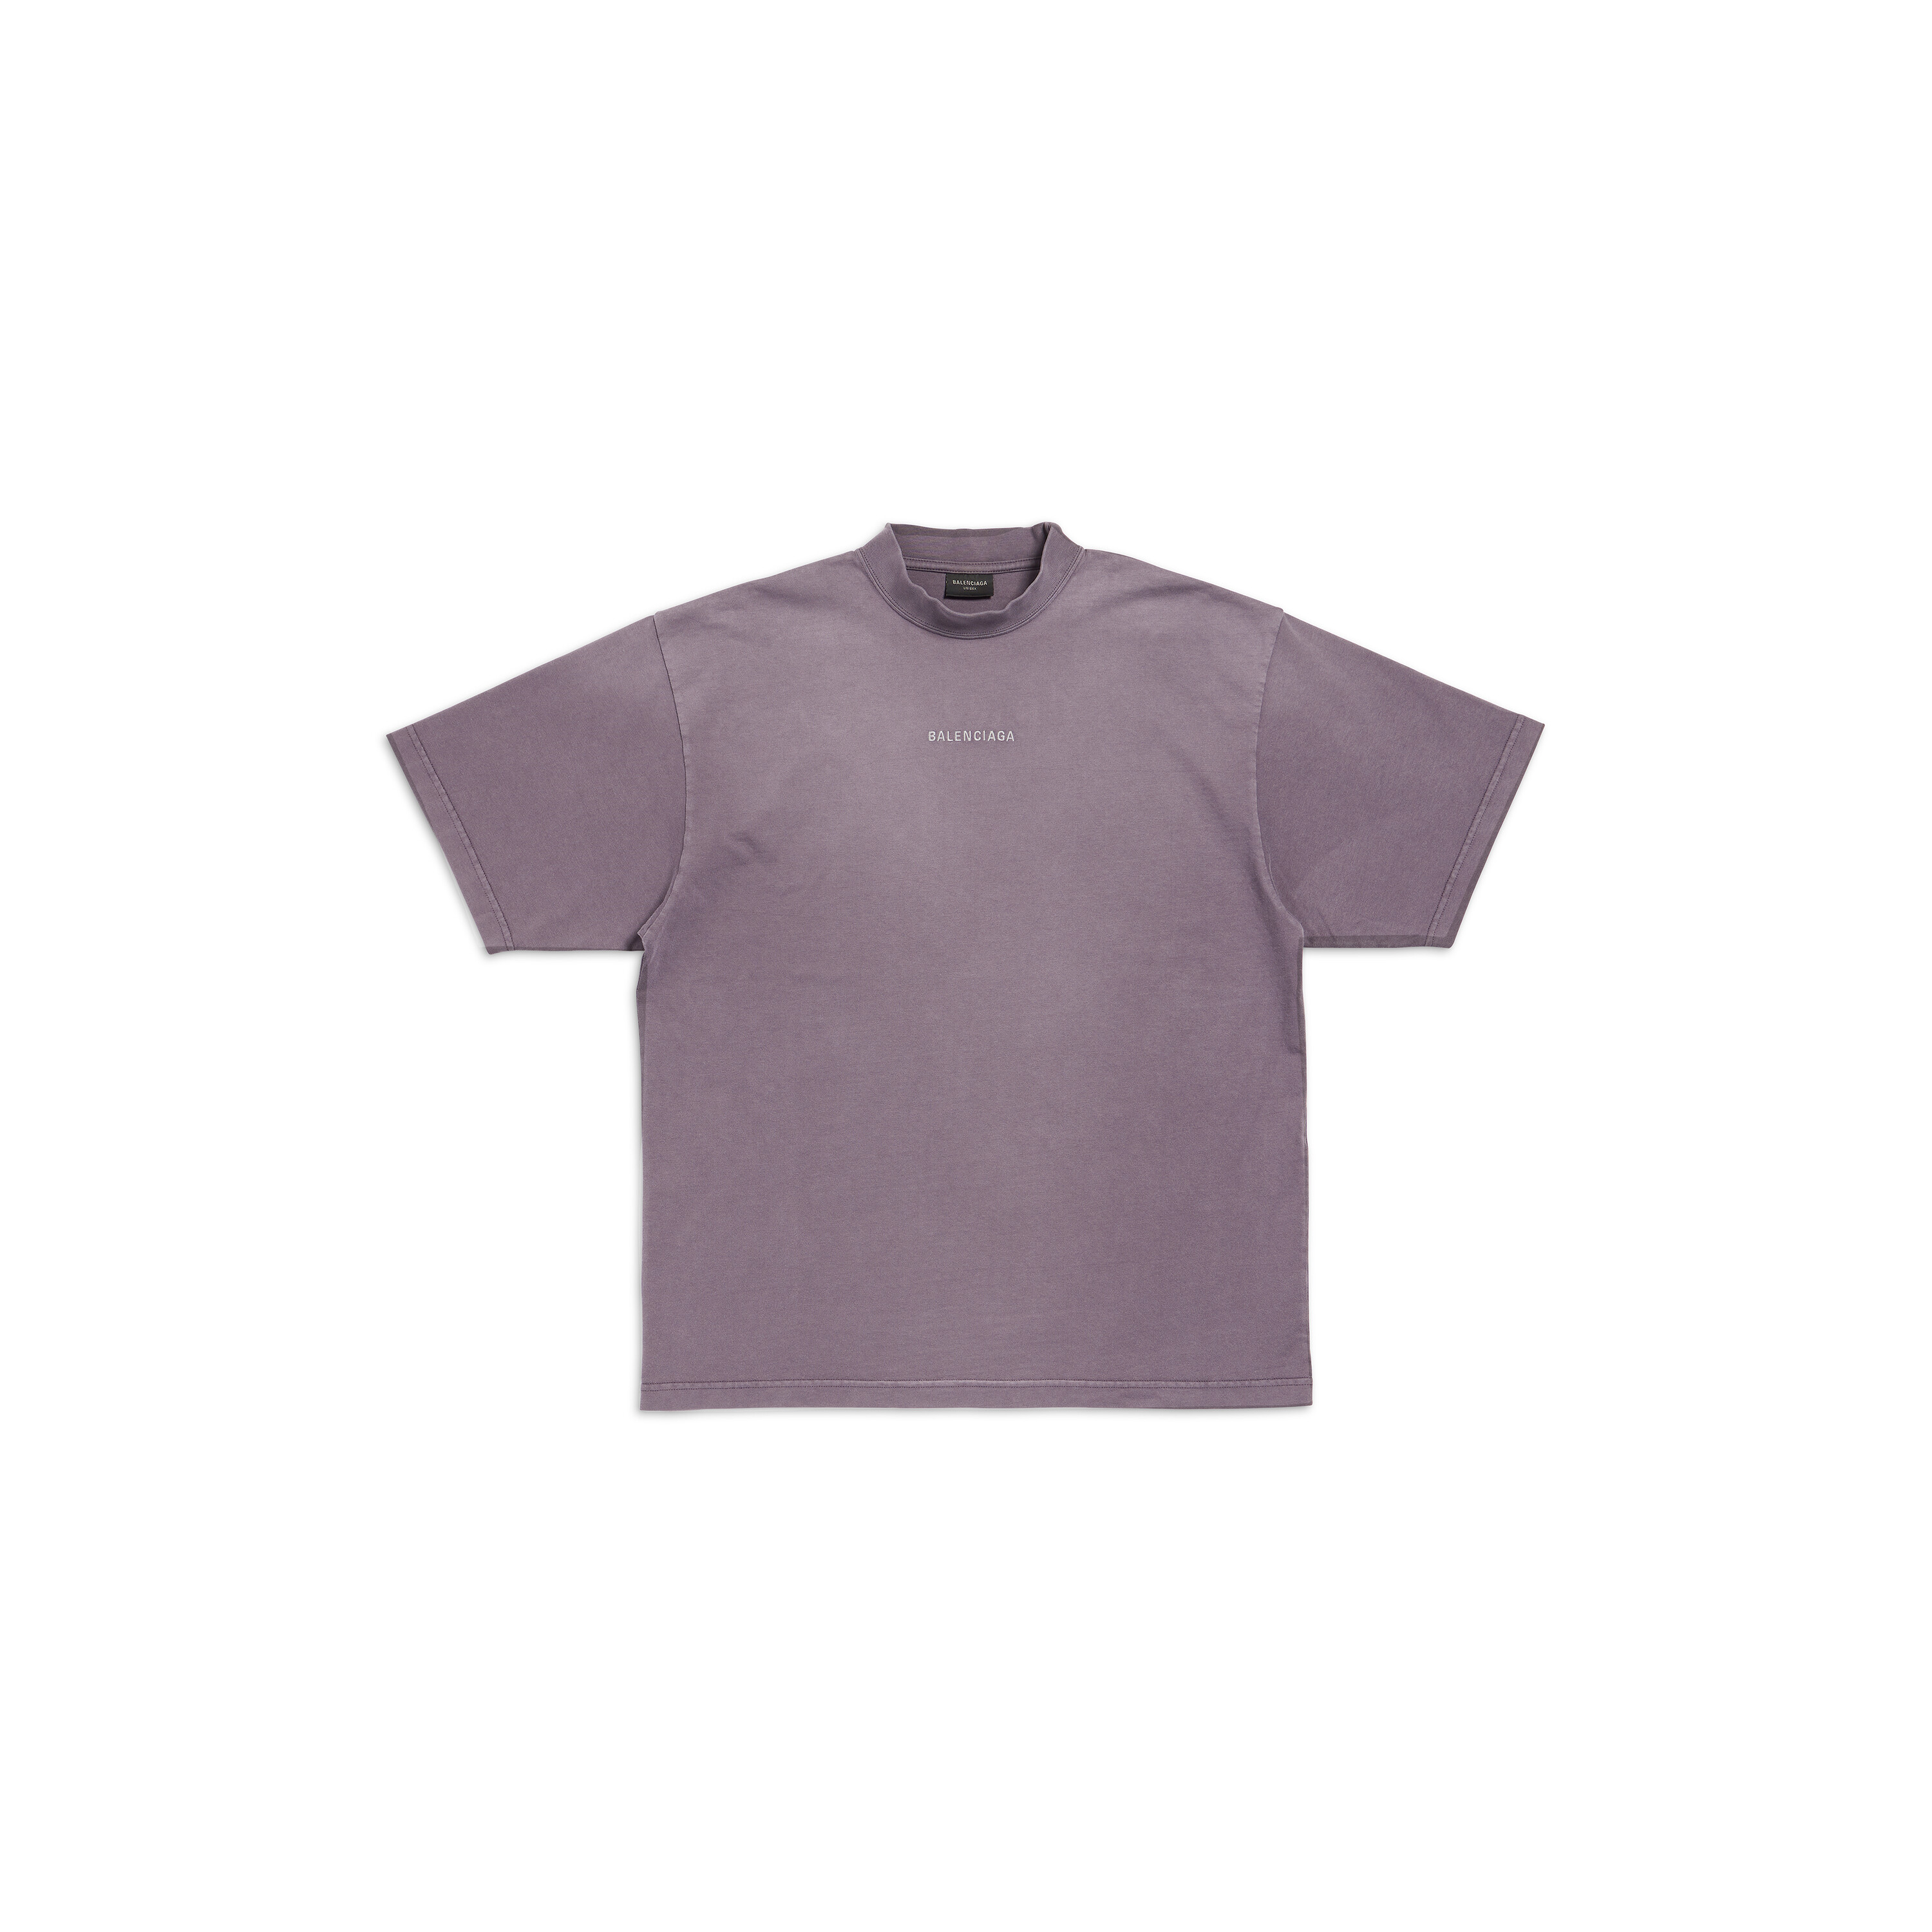 Balenciaga Back T-shirt Medium Fit in Purple/grey | Balenciaga US